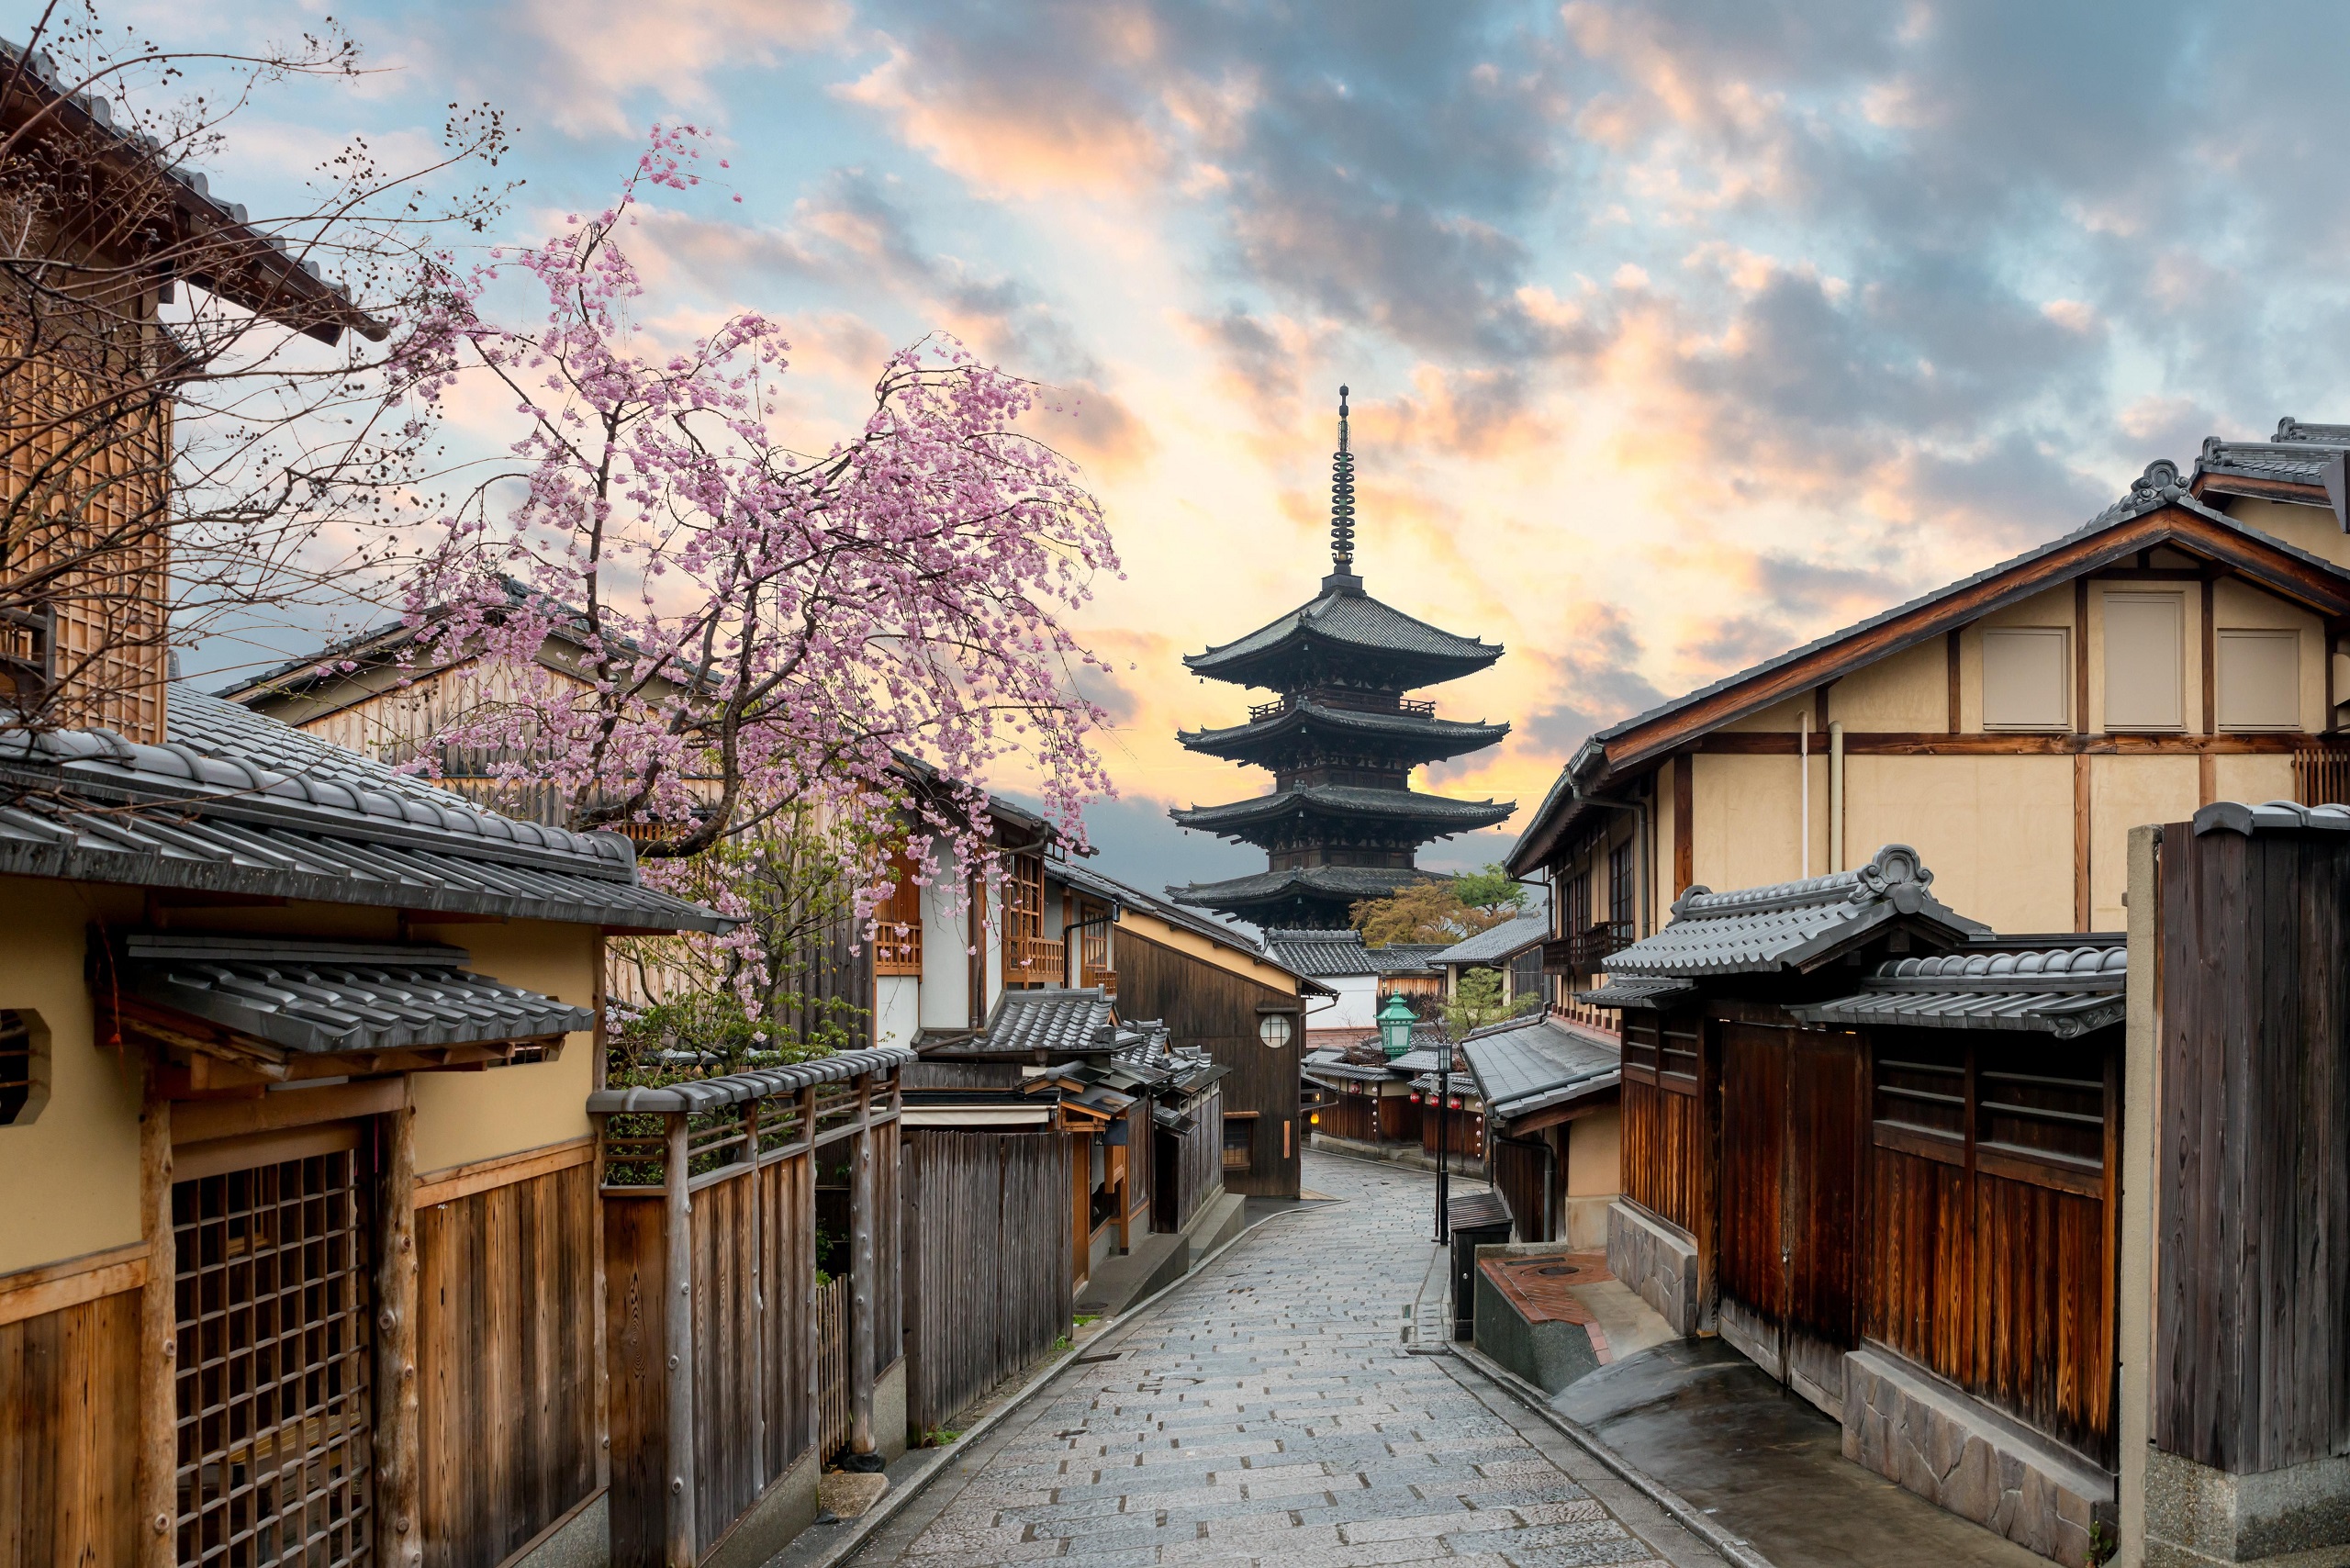 General 2560x1708 Japan cherry blossom street Asia urban outdoors